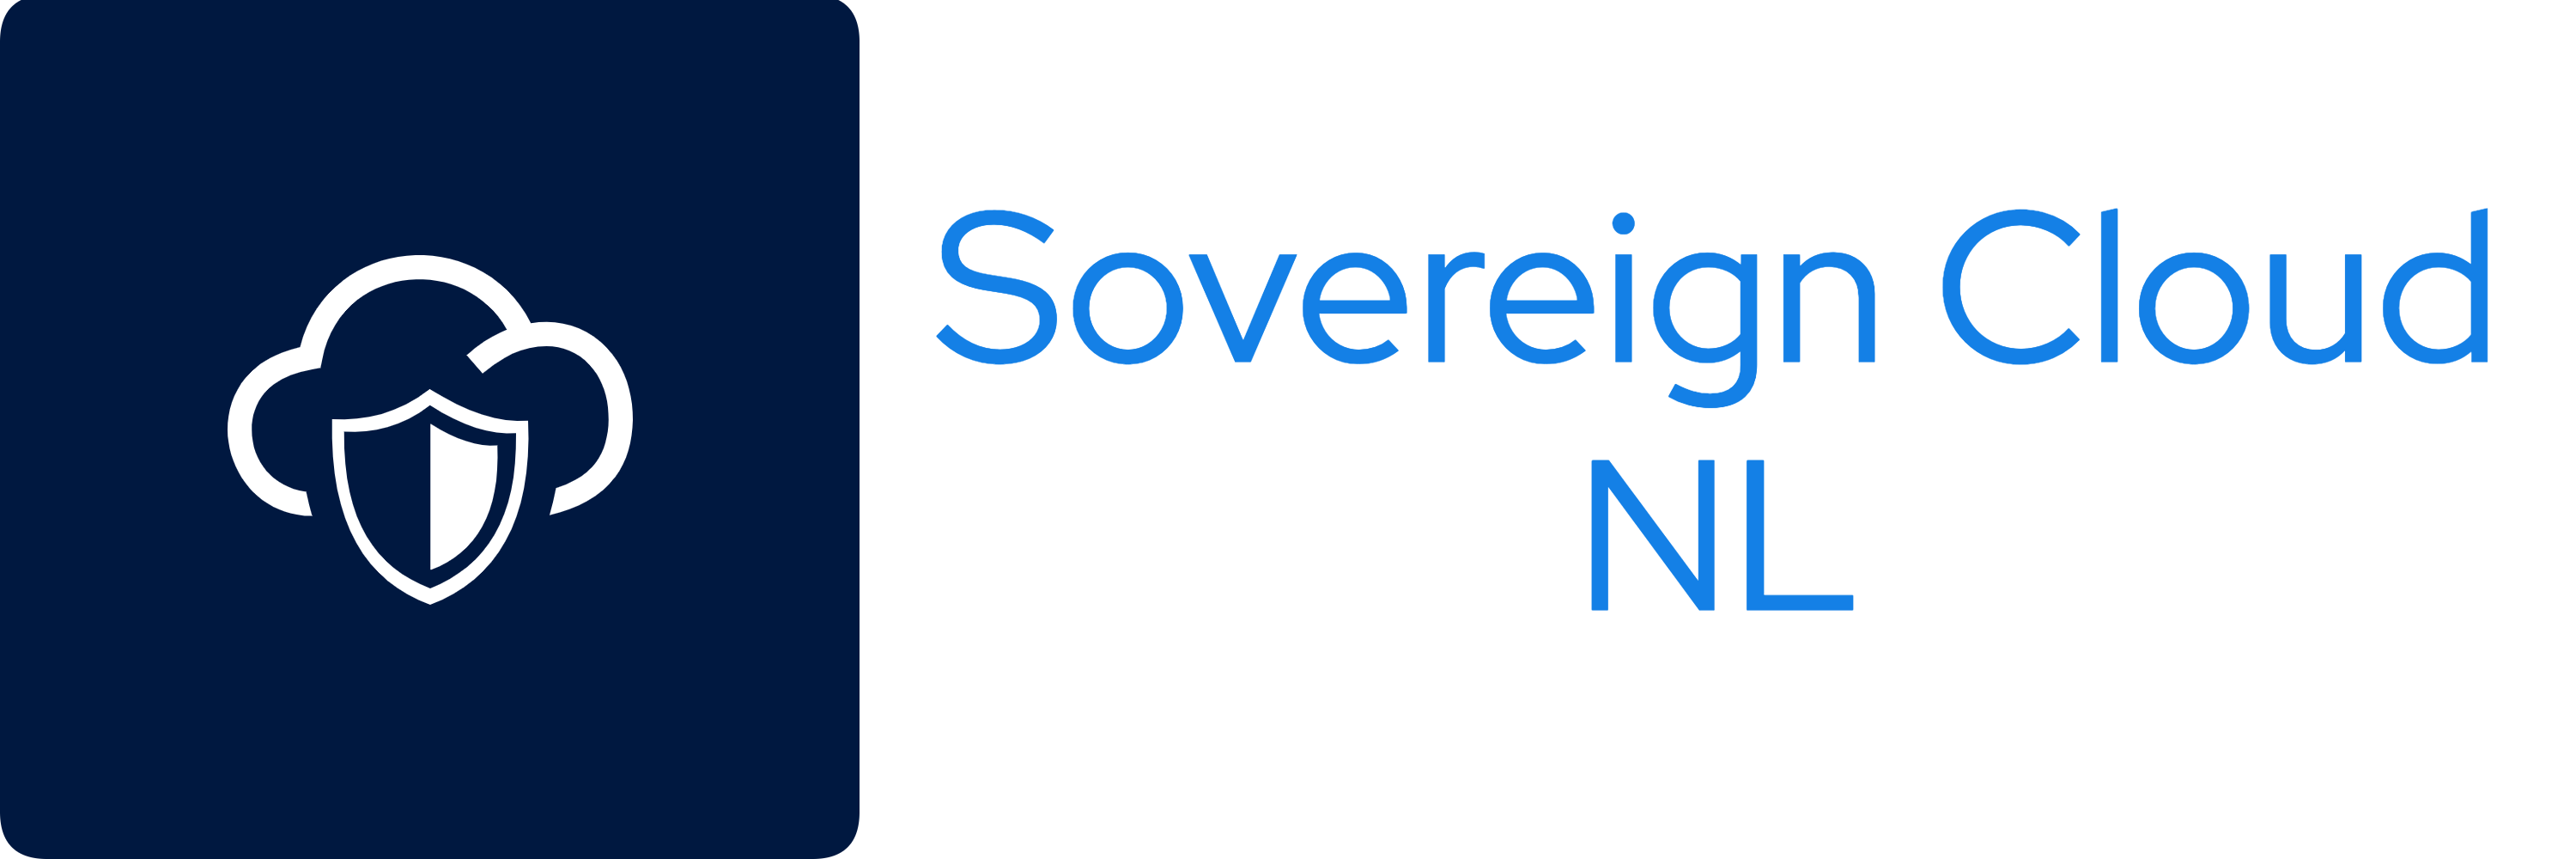 Sovereign Cloud NL Community